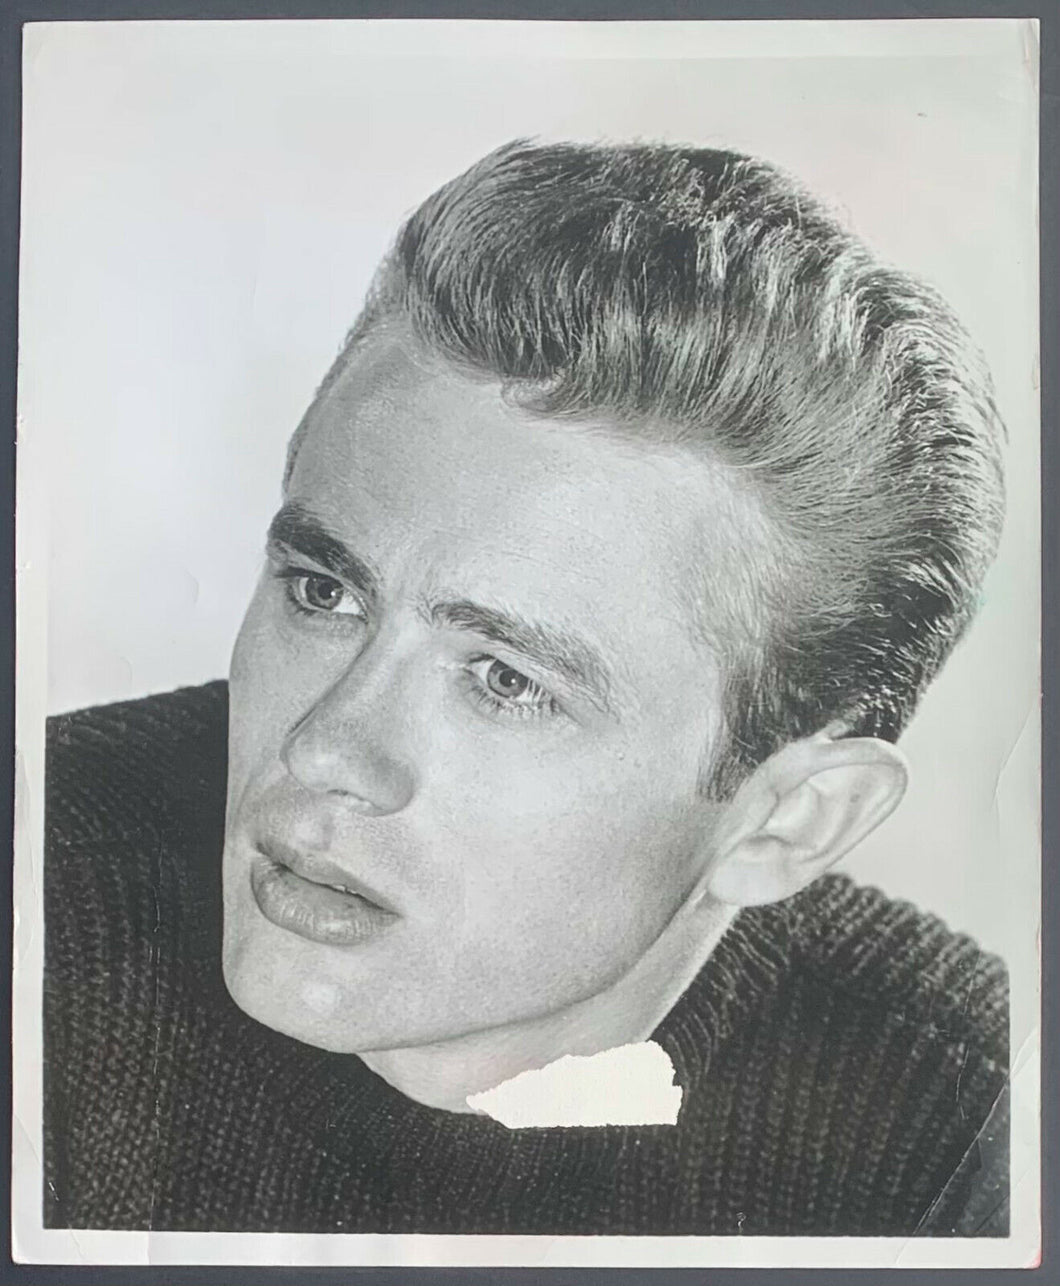 1954 James Dean Vintage Studio Photo Hollywood Counter Culture Bad Boy Famous